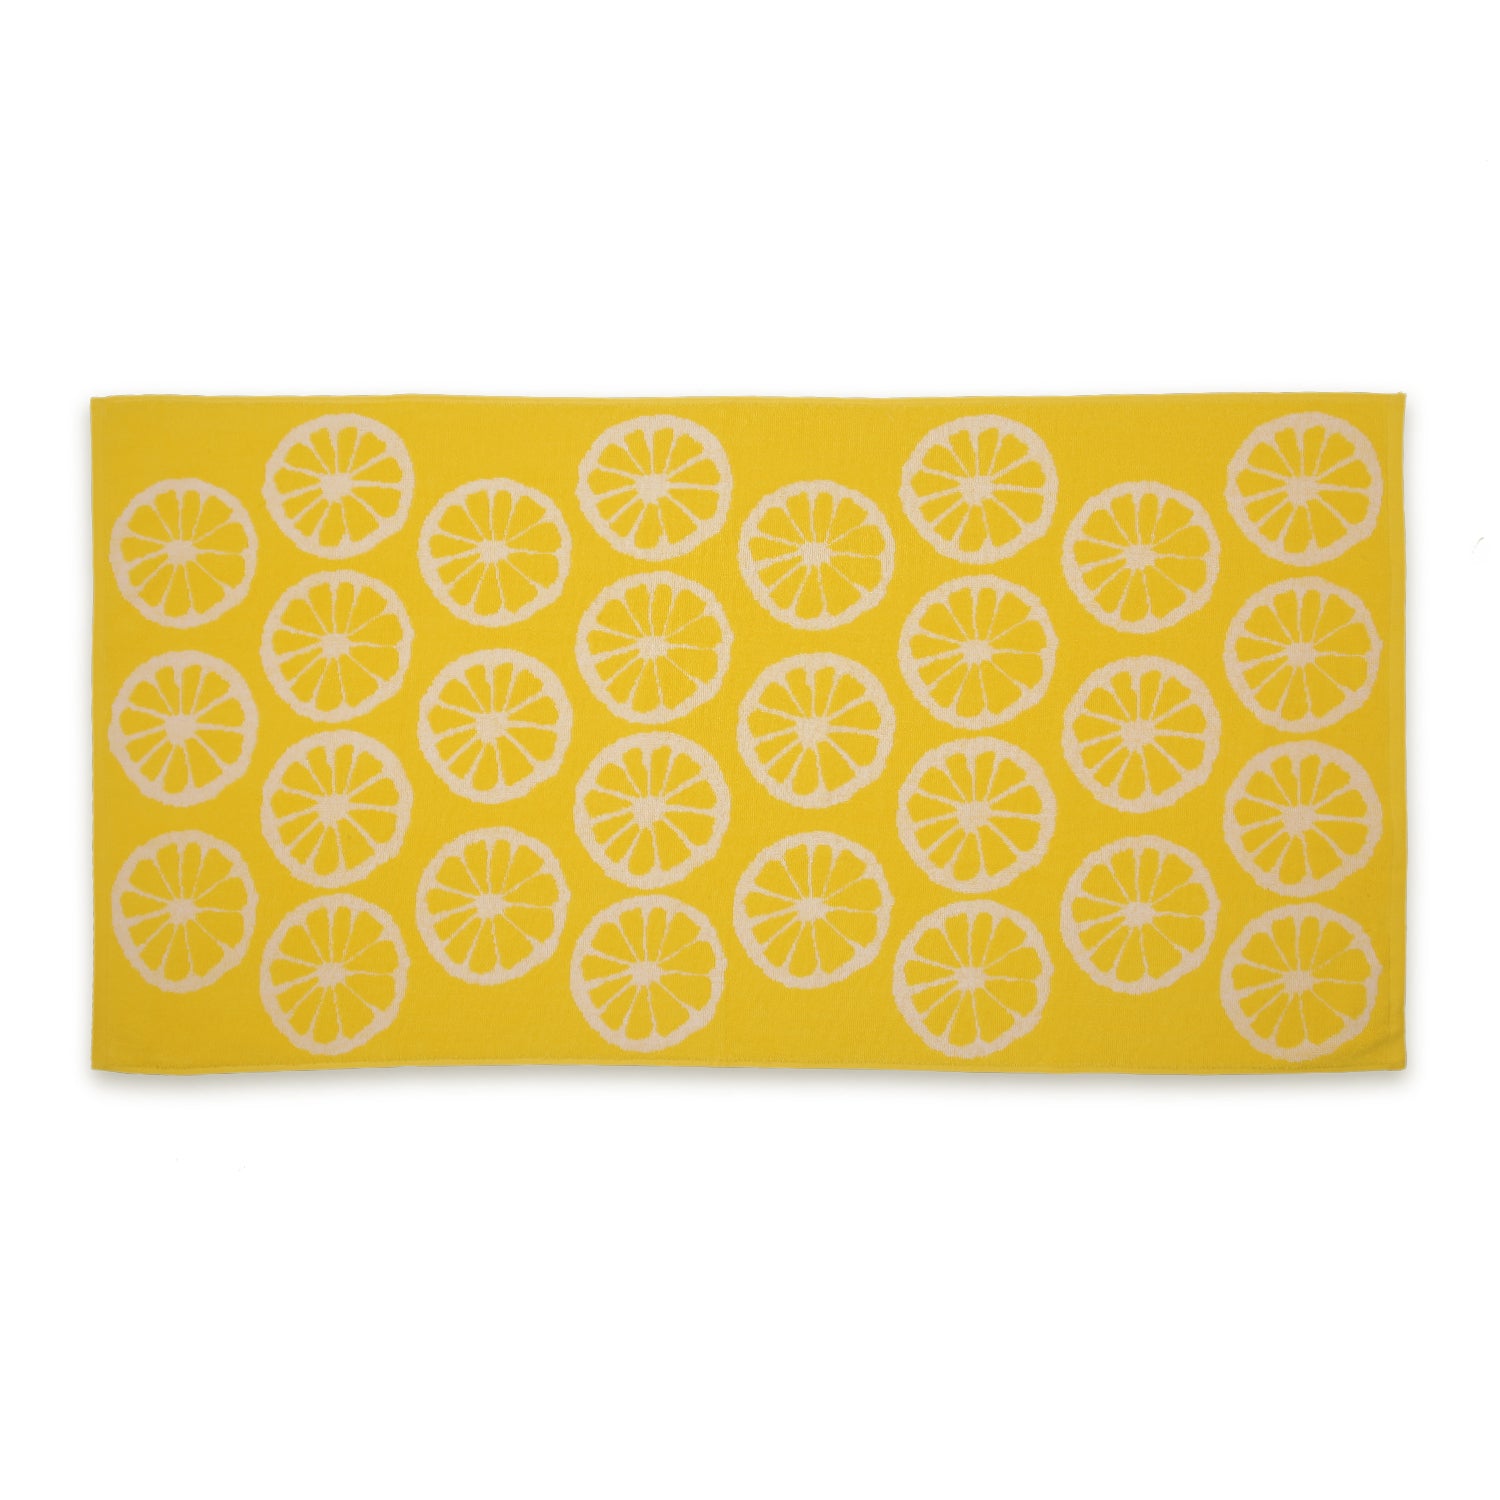 Lemon Terry Towel